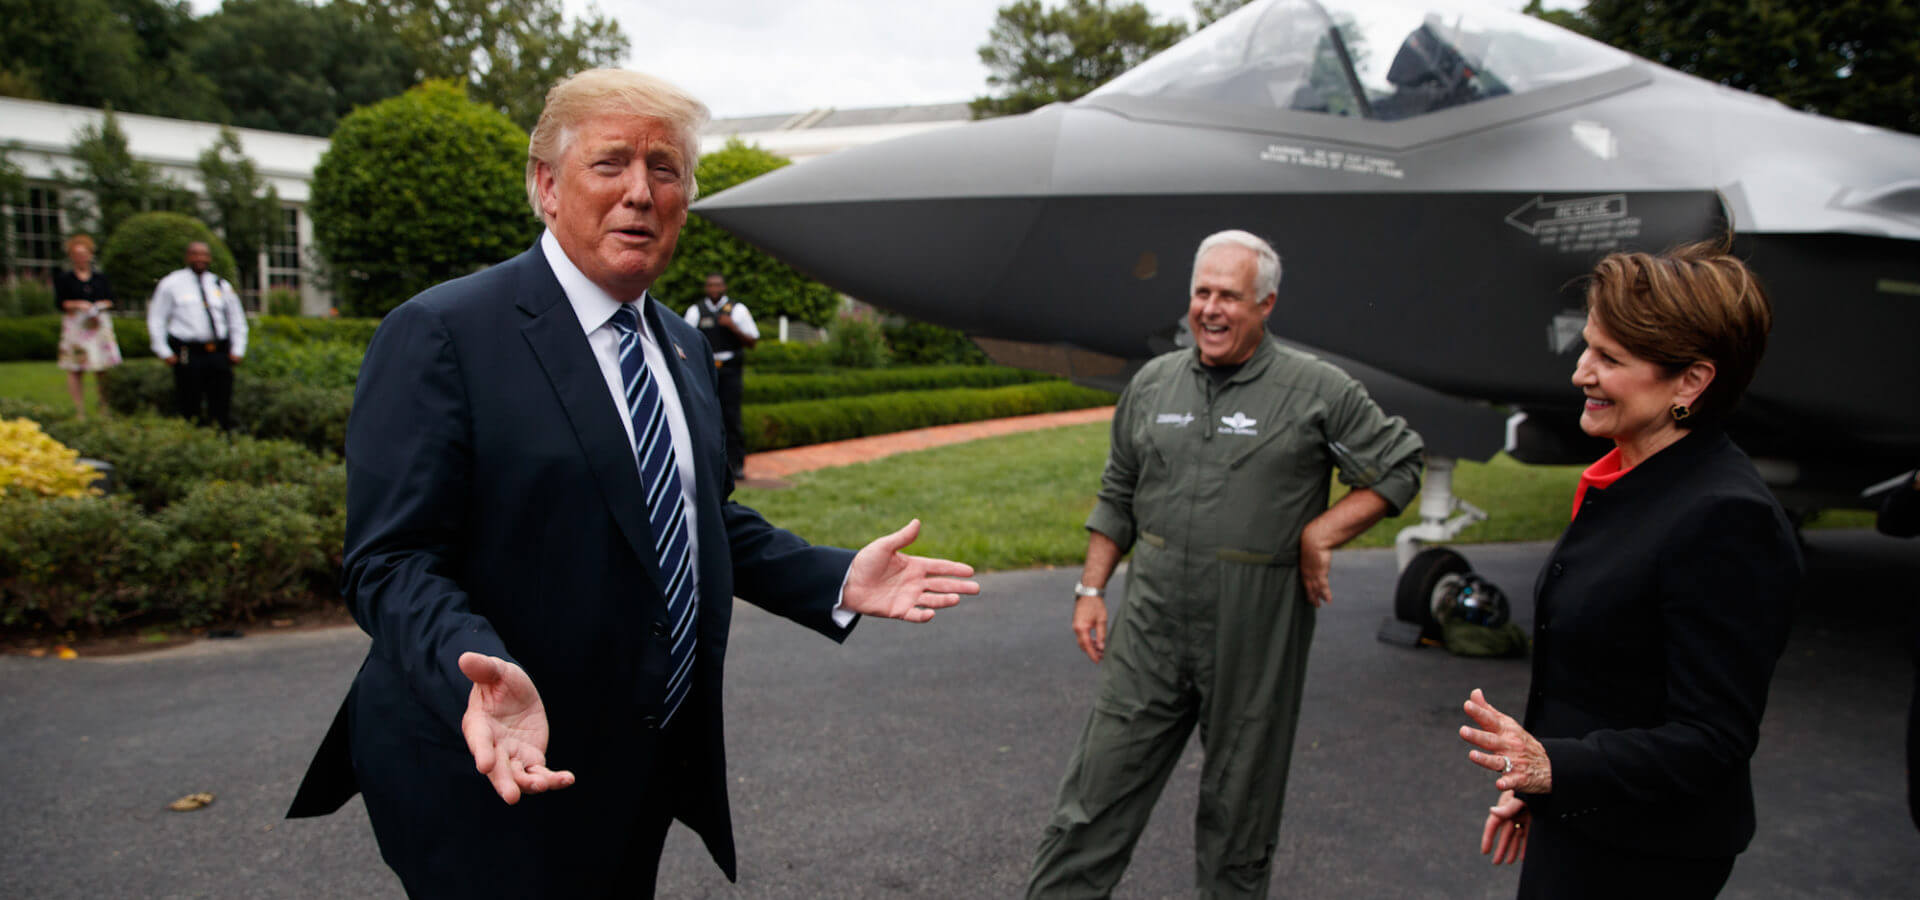 Donald Trump f-35 Lockheed Martin